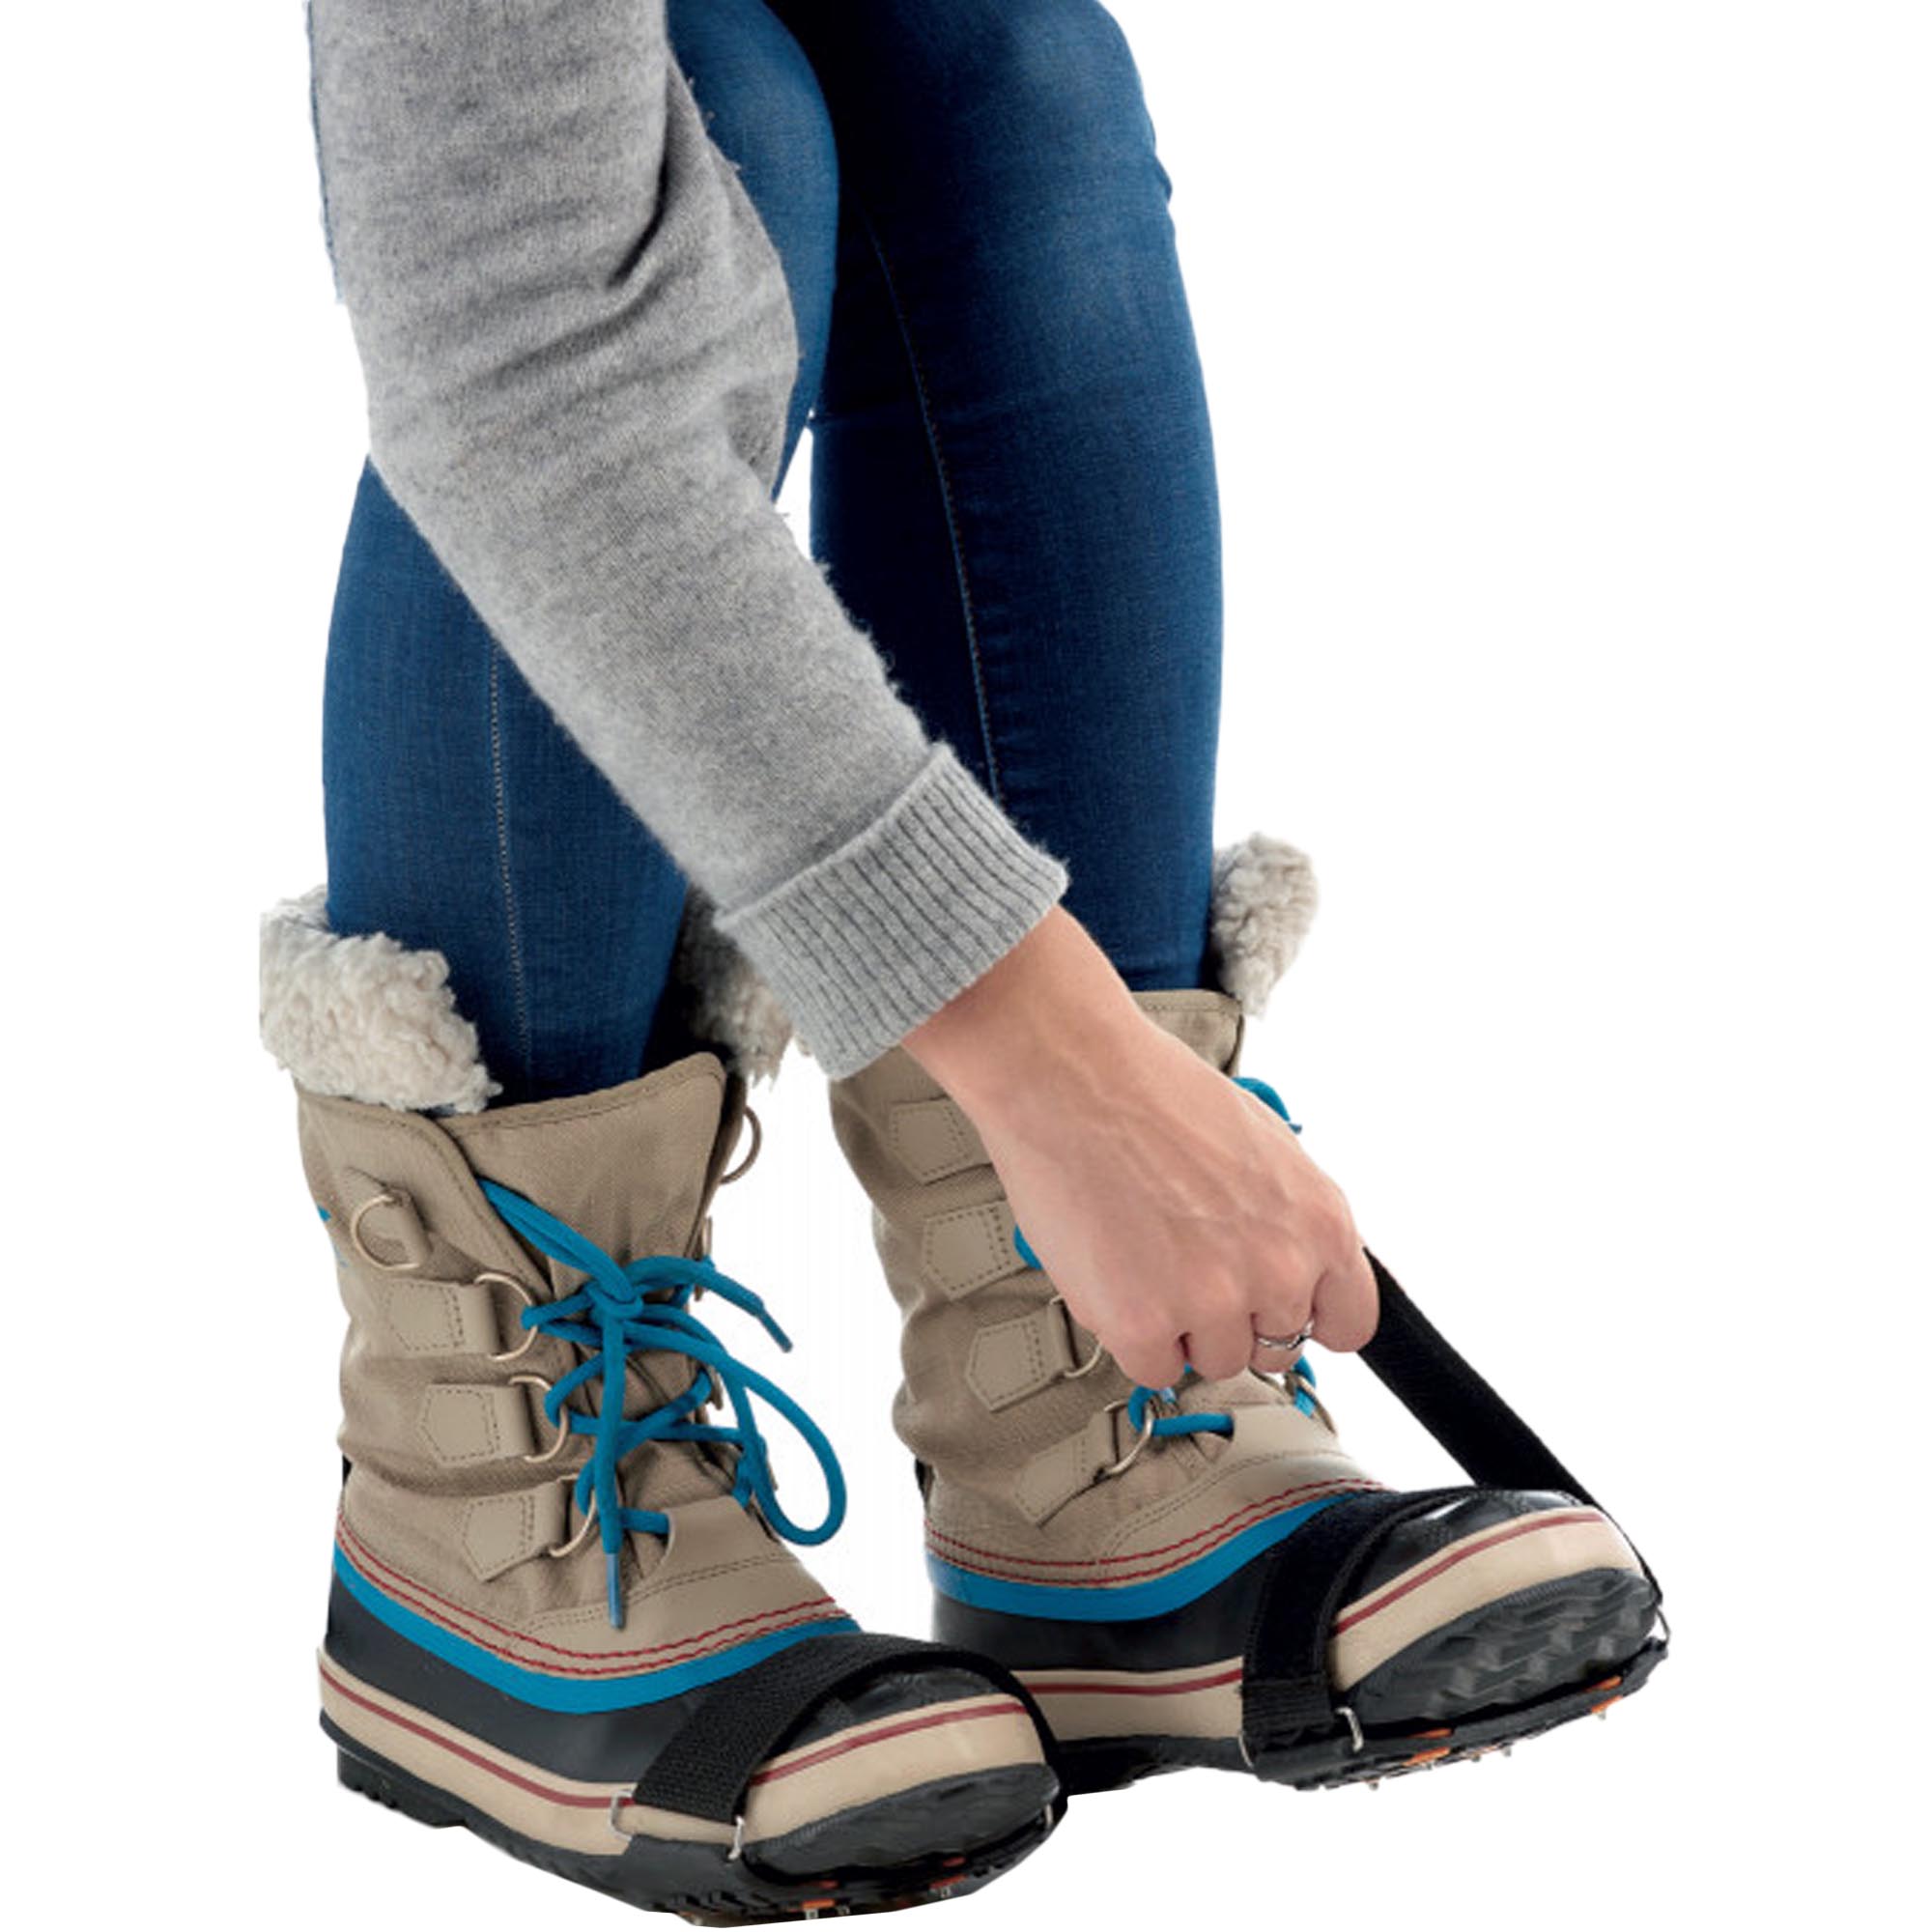 Sidas Walk Traction 1/2 Non-Slip Shoe Ice Spike Grips